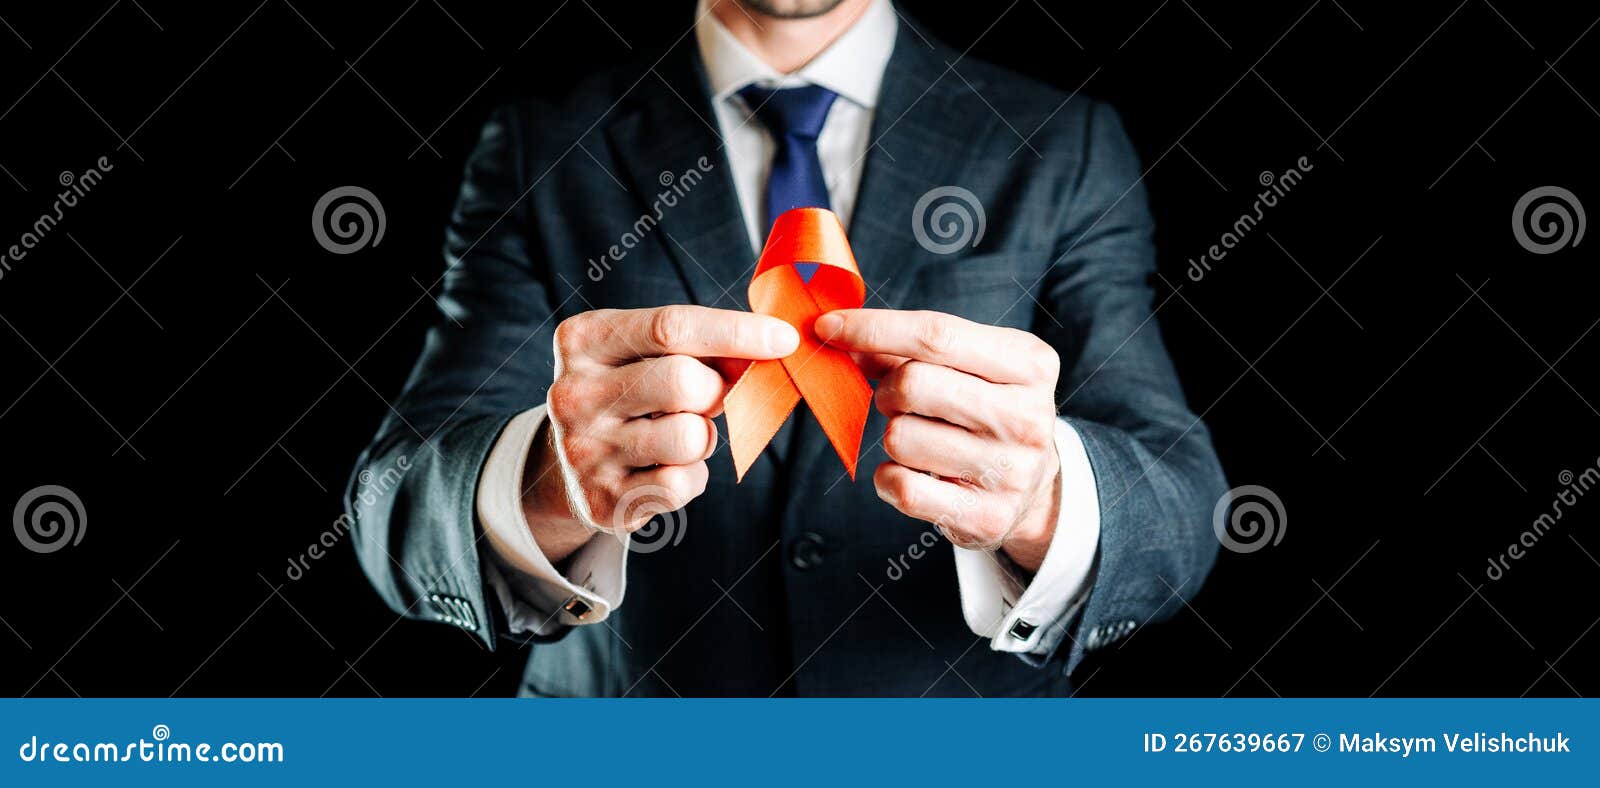 Hiv Virus. Red Ribbon Symbol in Hiv World Day on Dark Background